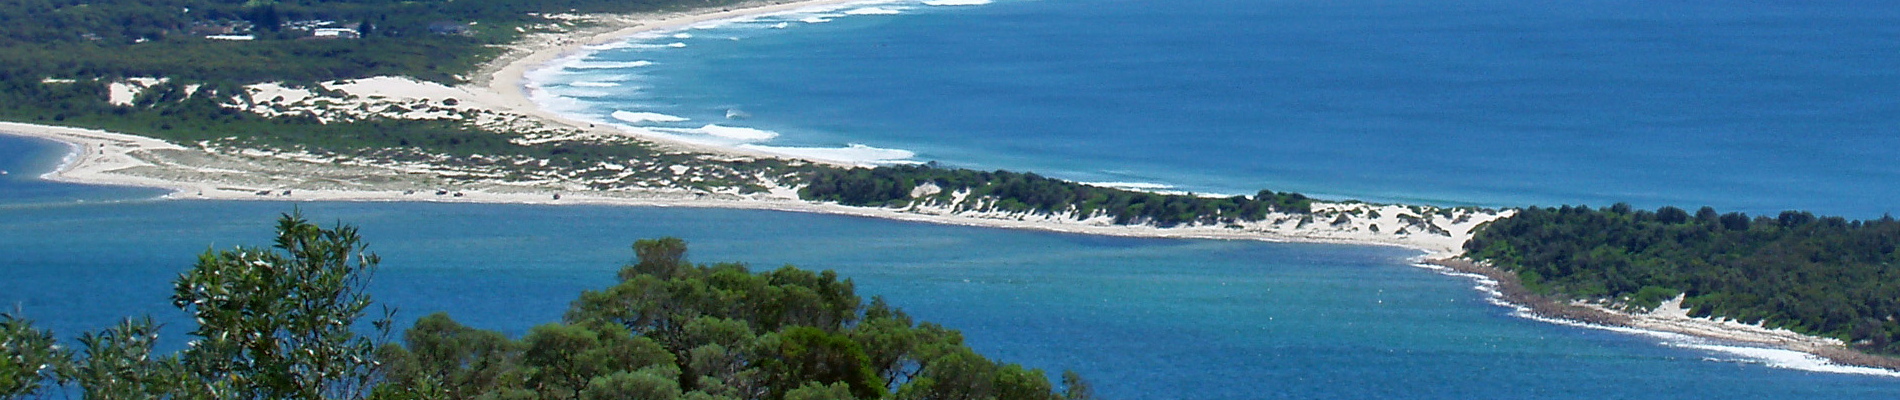 Nelson bay at Port Stephens